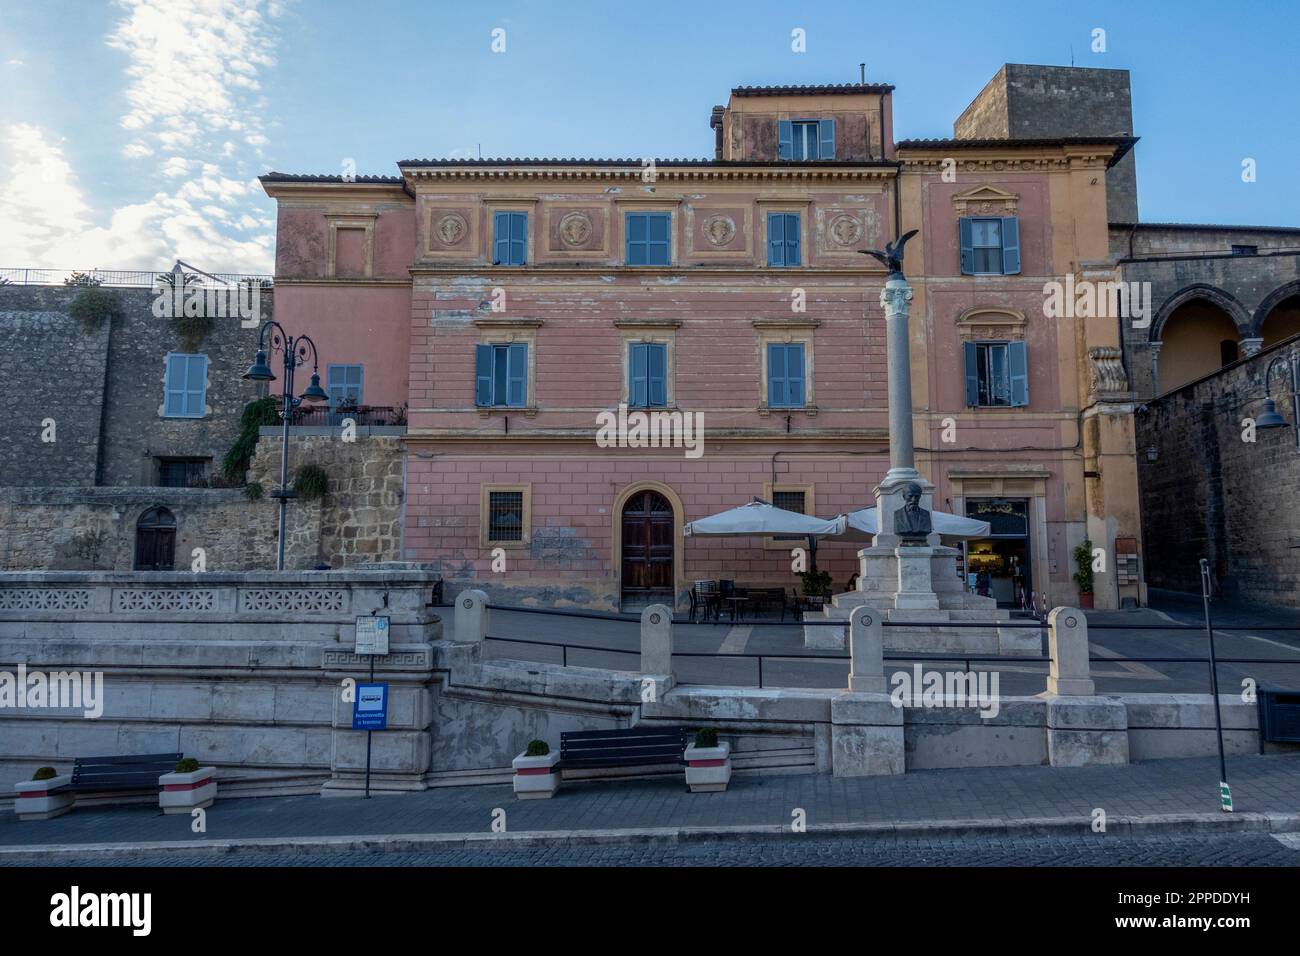 Italy, Lazio, Tarquinia, Monumento a Giuseppe Mazzini in front of residential building Stock Photo